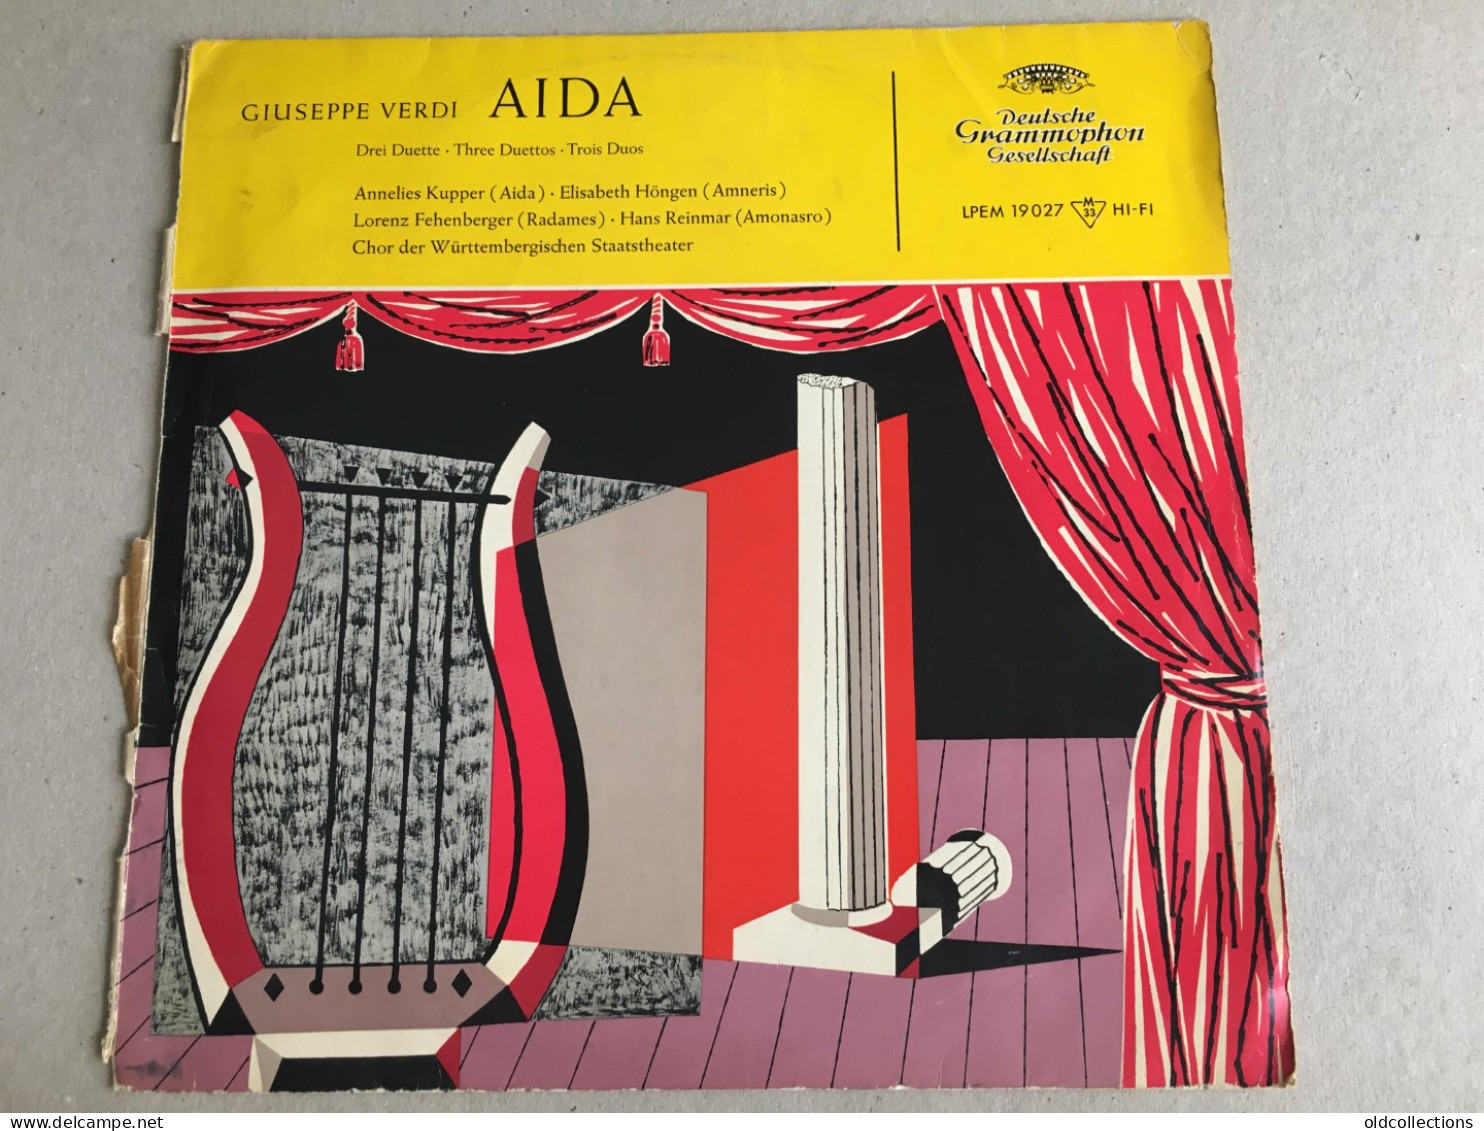 Schallplatte Vinyl Record Disque Vinyle LP Record - Giuseppe Verdi Aida  - Opera